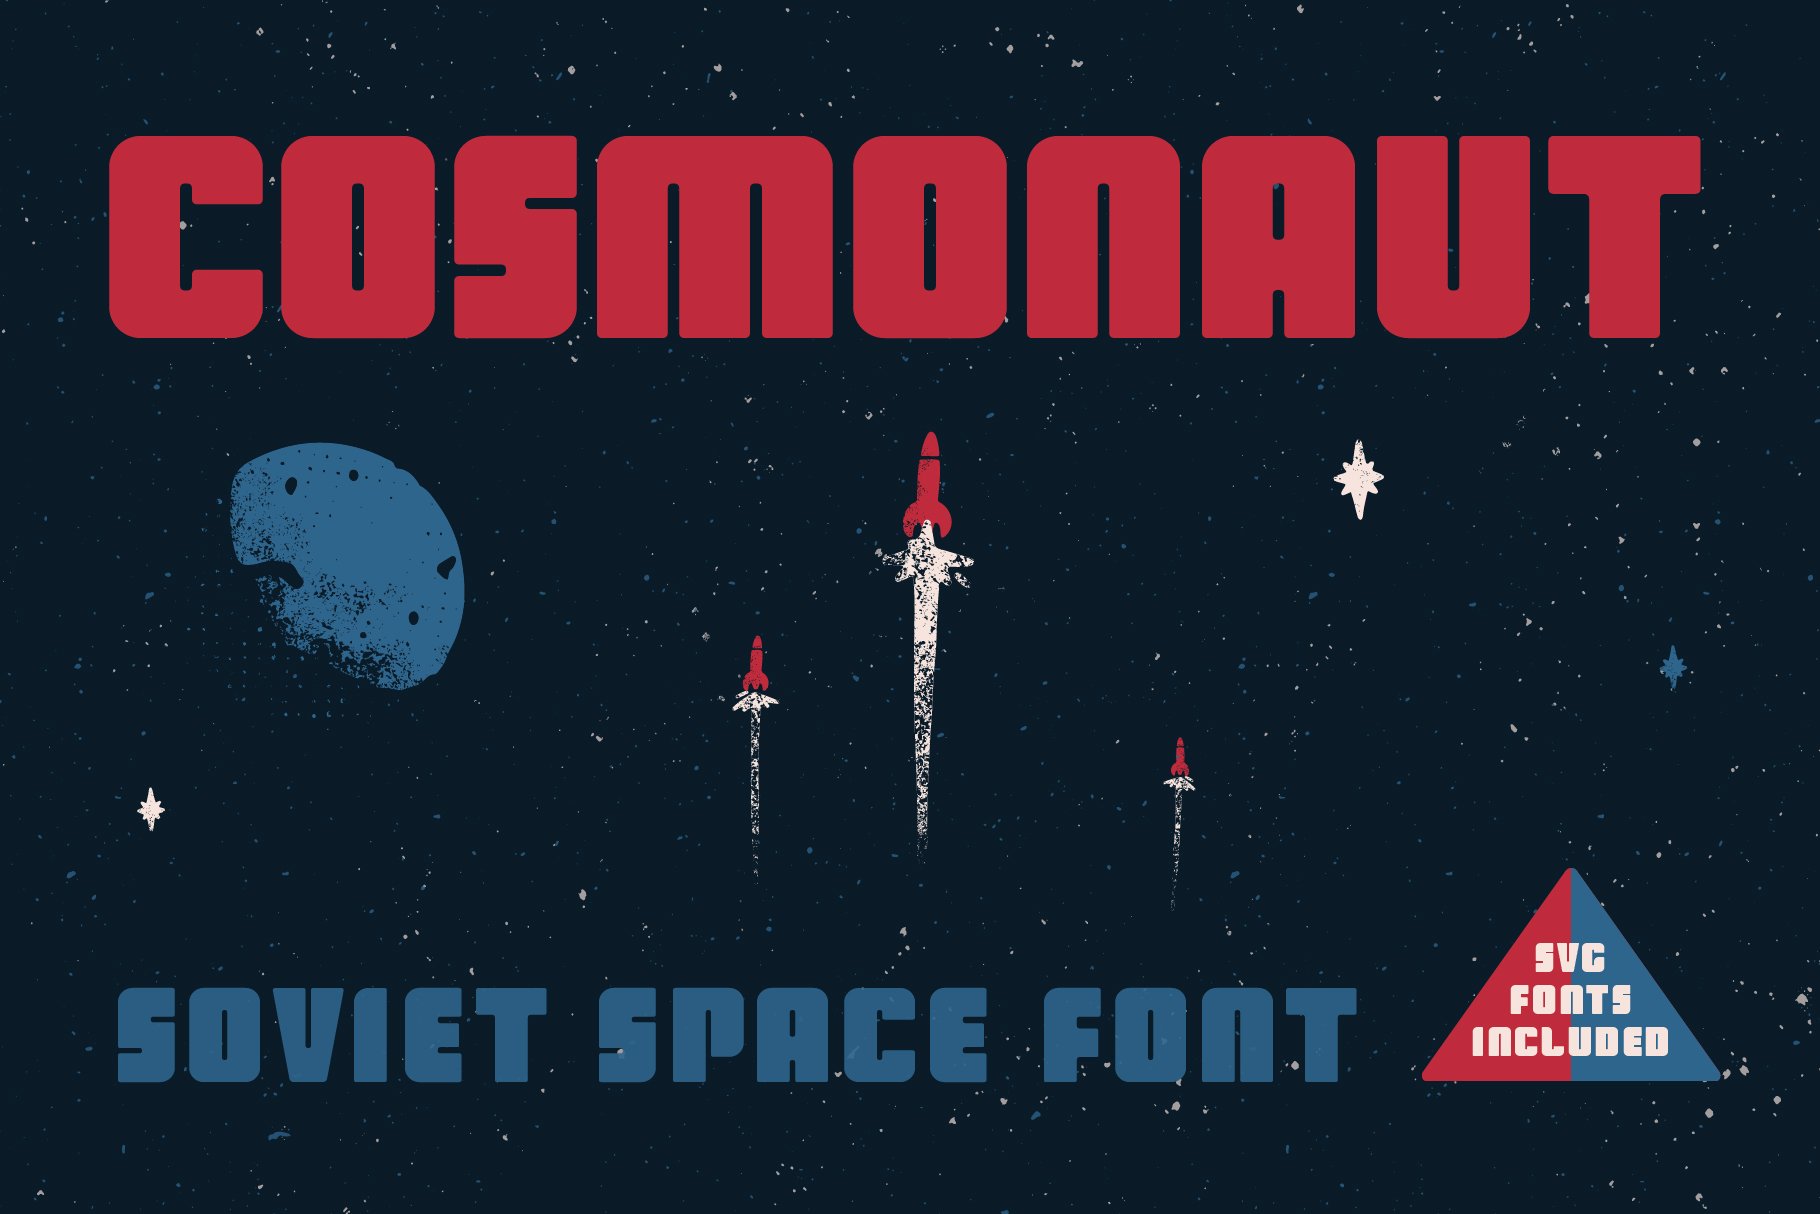 Cosmonaut - Soviet Space Font cover image.